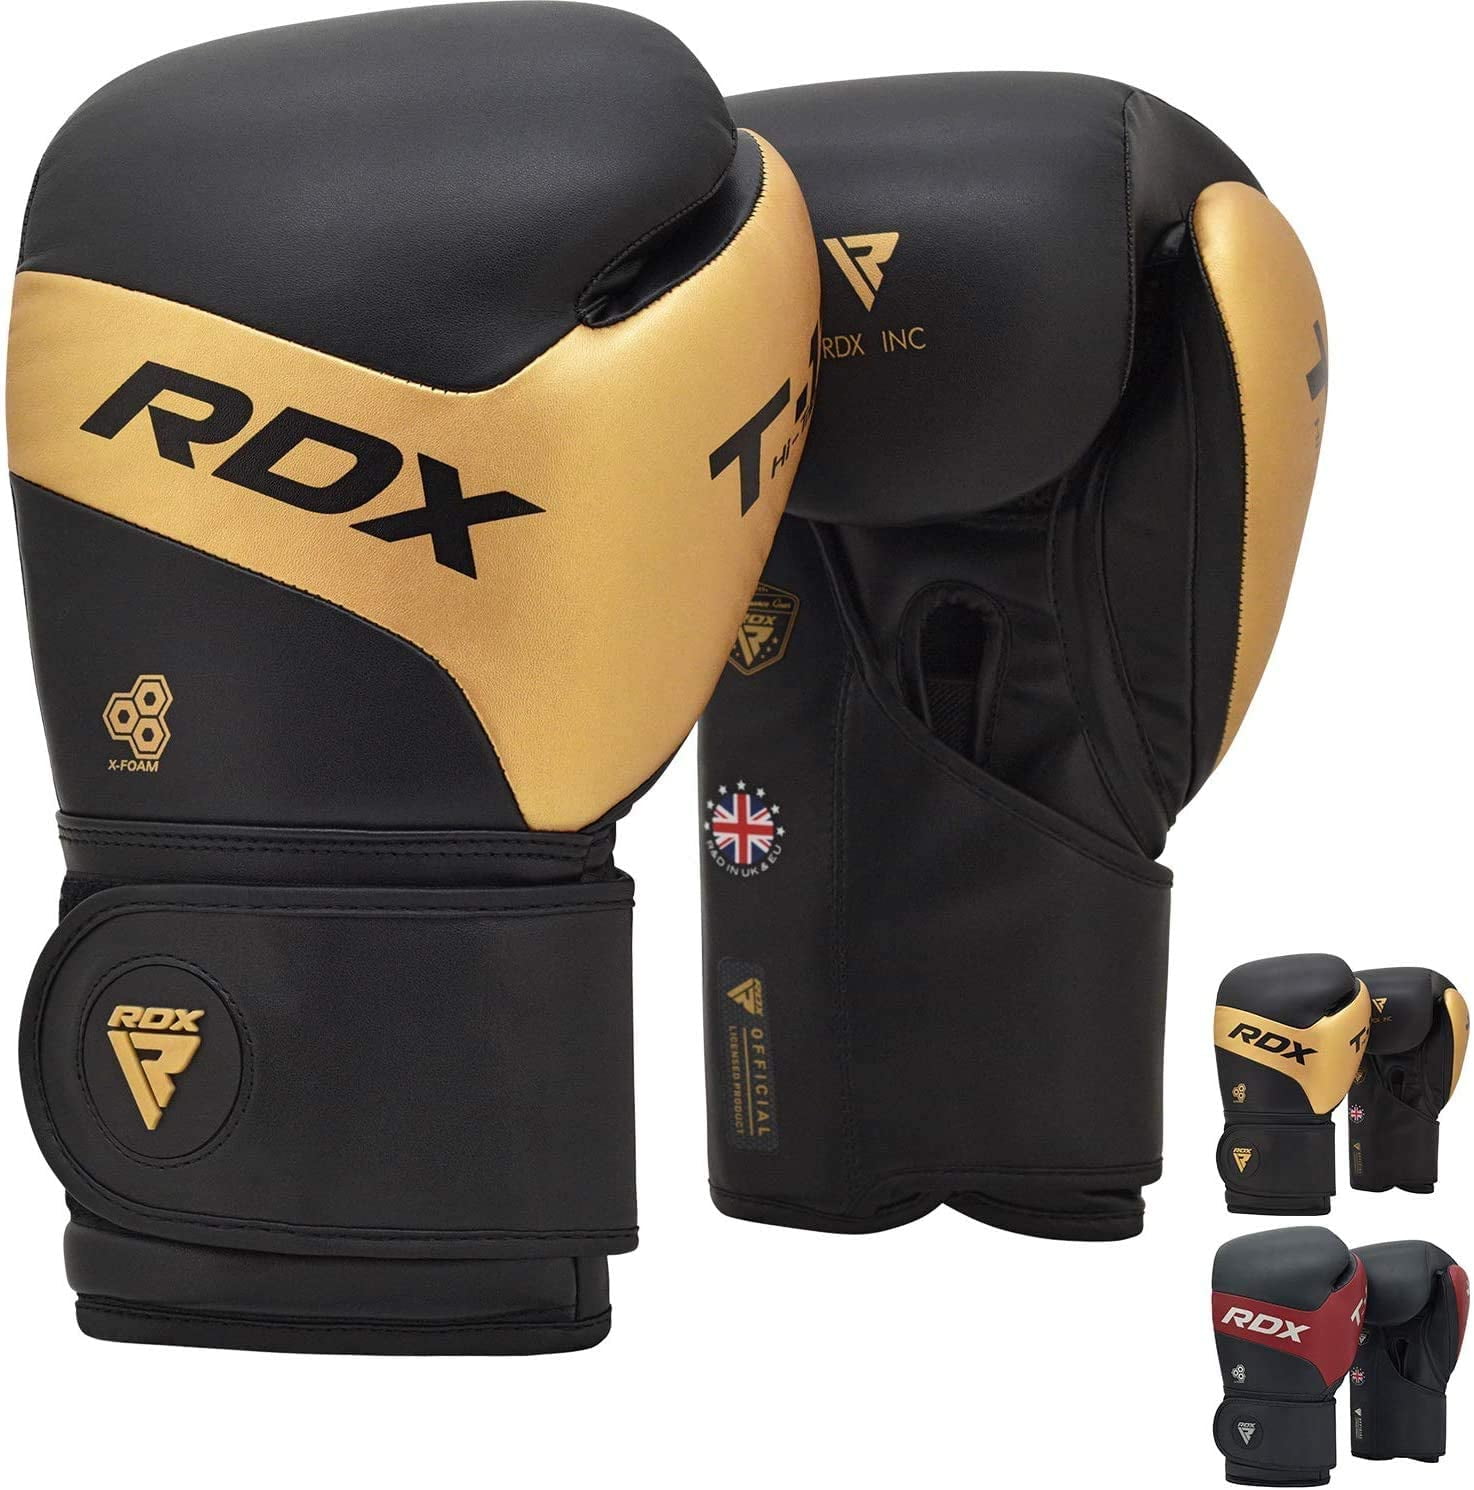 ADii™ Skin-Tec Leather Boxing Gloves Punching Training Kickboxing Sparring Glove 